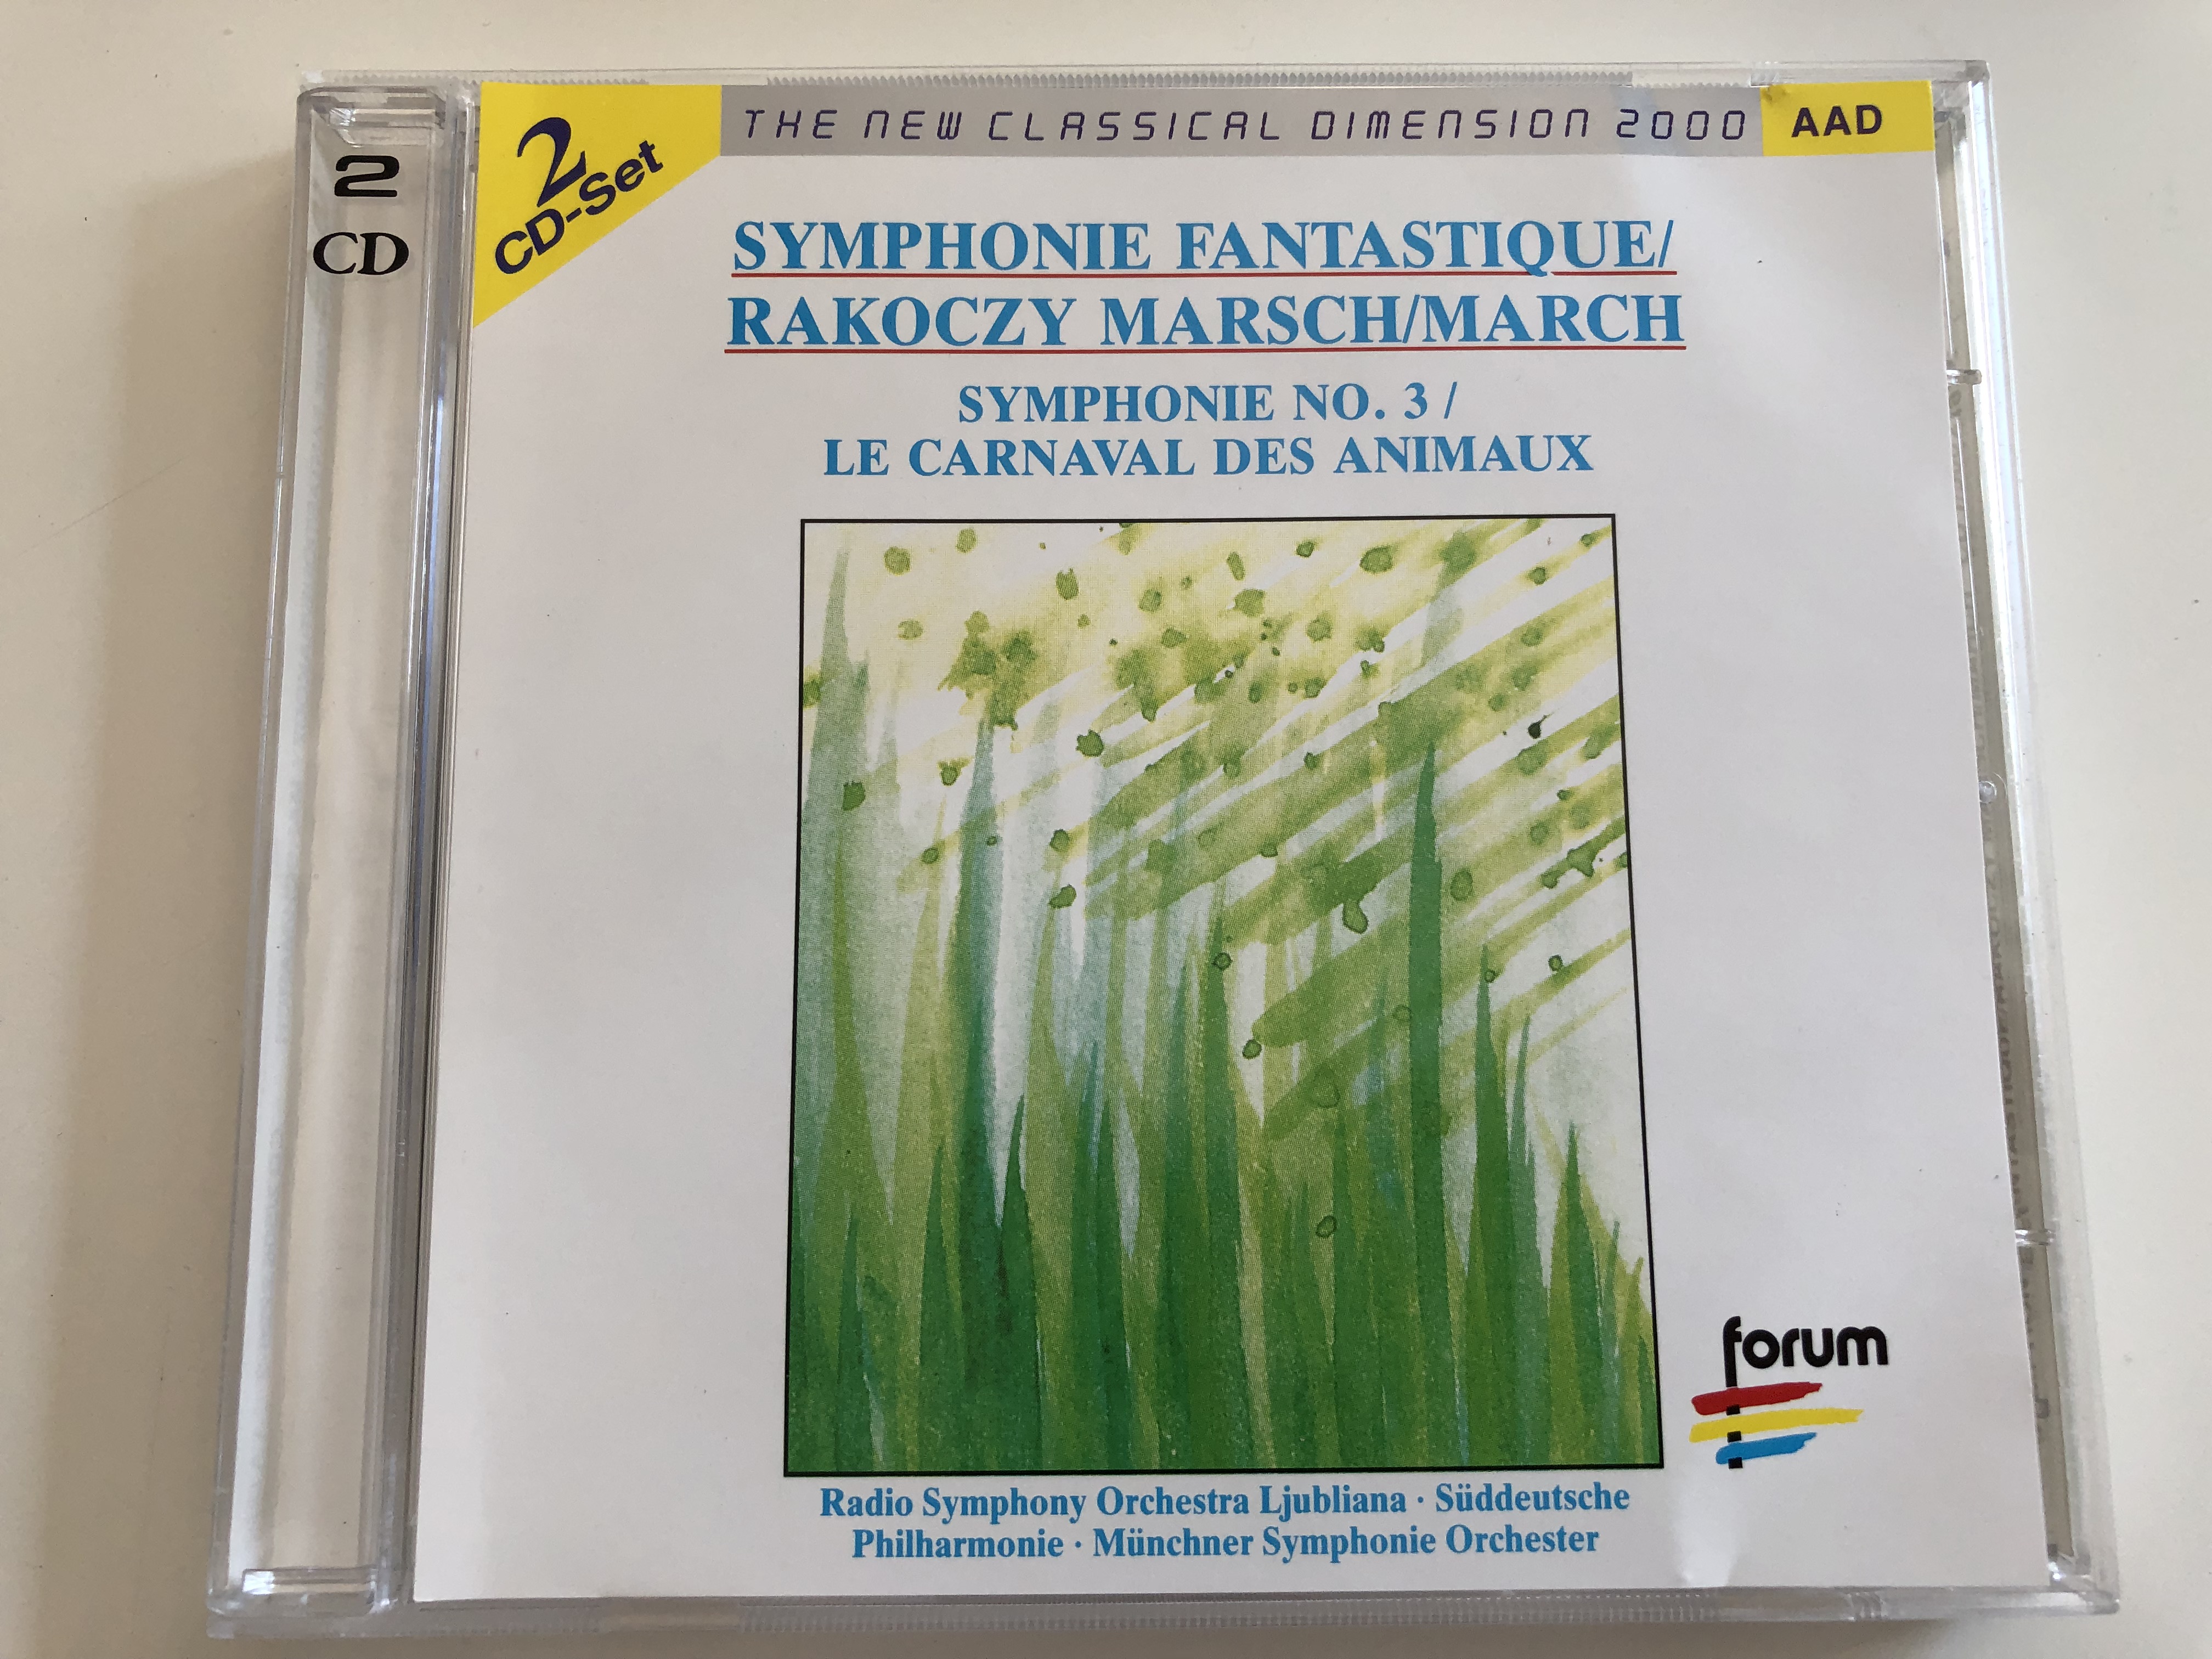 symphonie-fantastique-rakoczy-marsch-march-symphonie-no.-3-le-carnaval-des-animaux-radio-symphony-orchestra-ljubliana-s-ddeutsche-philharmonie-m-nchner-symphonie-orchester-2-cd-set-the-new-classical-dimension-2000-1-.jpg